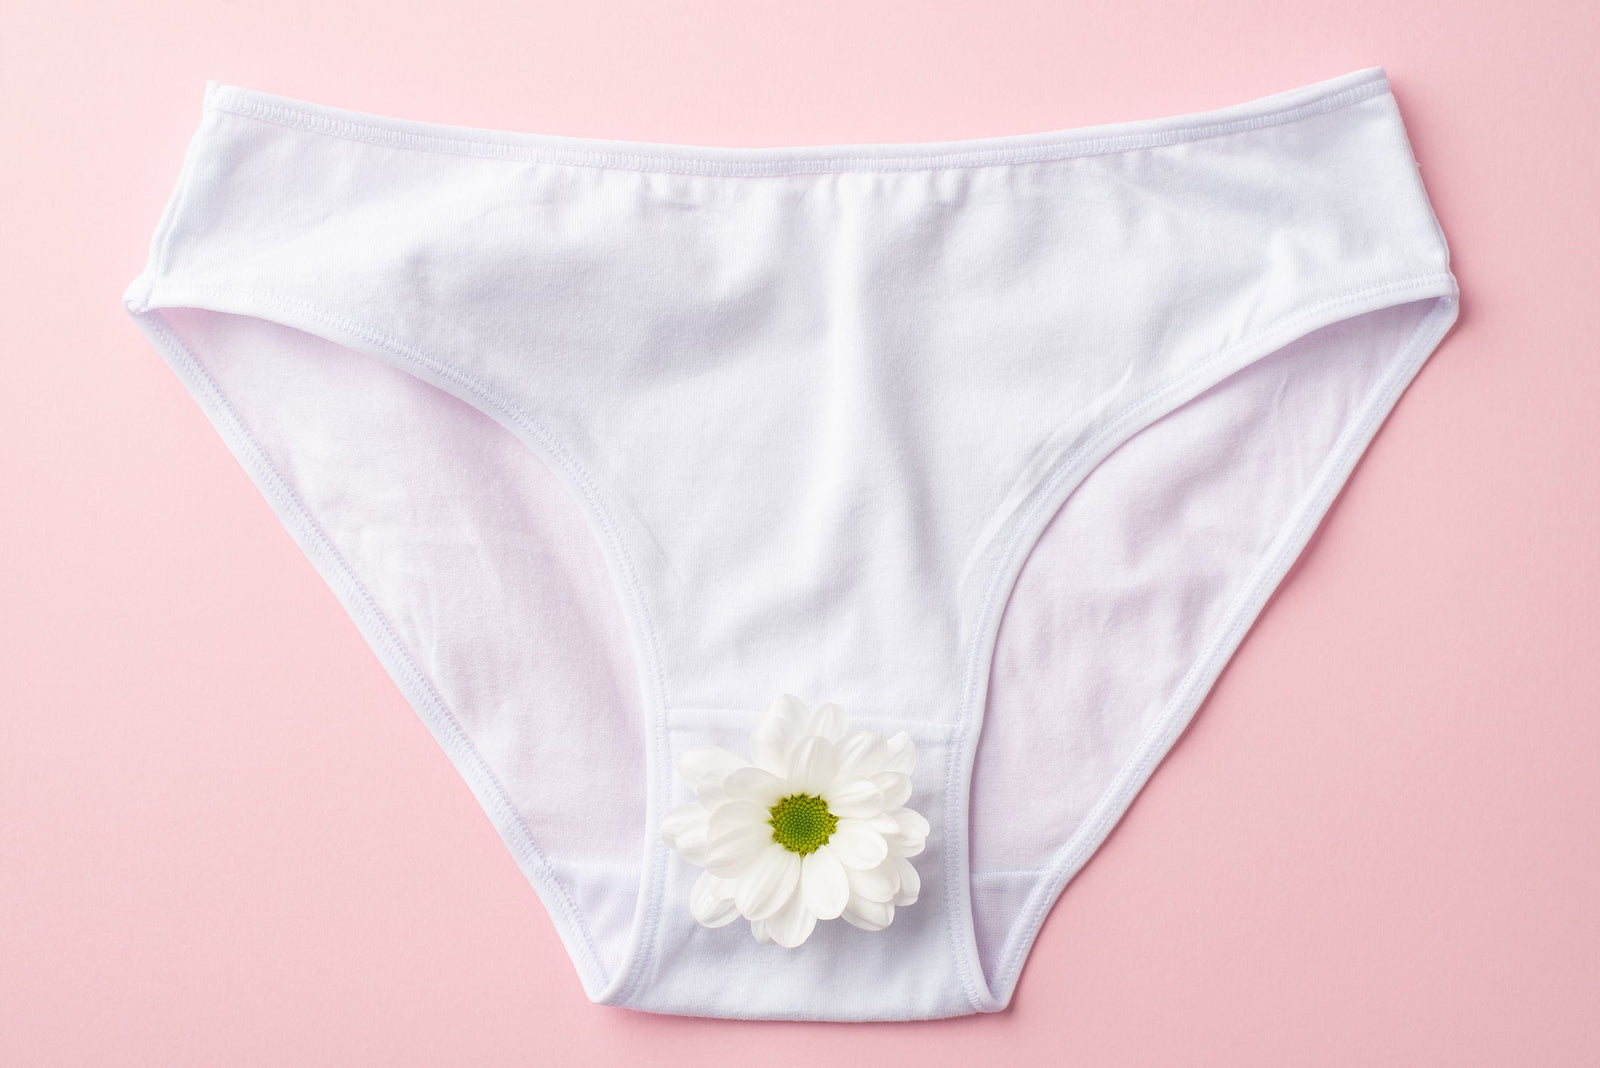 Wearing a seamless underwear may cause UTI